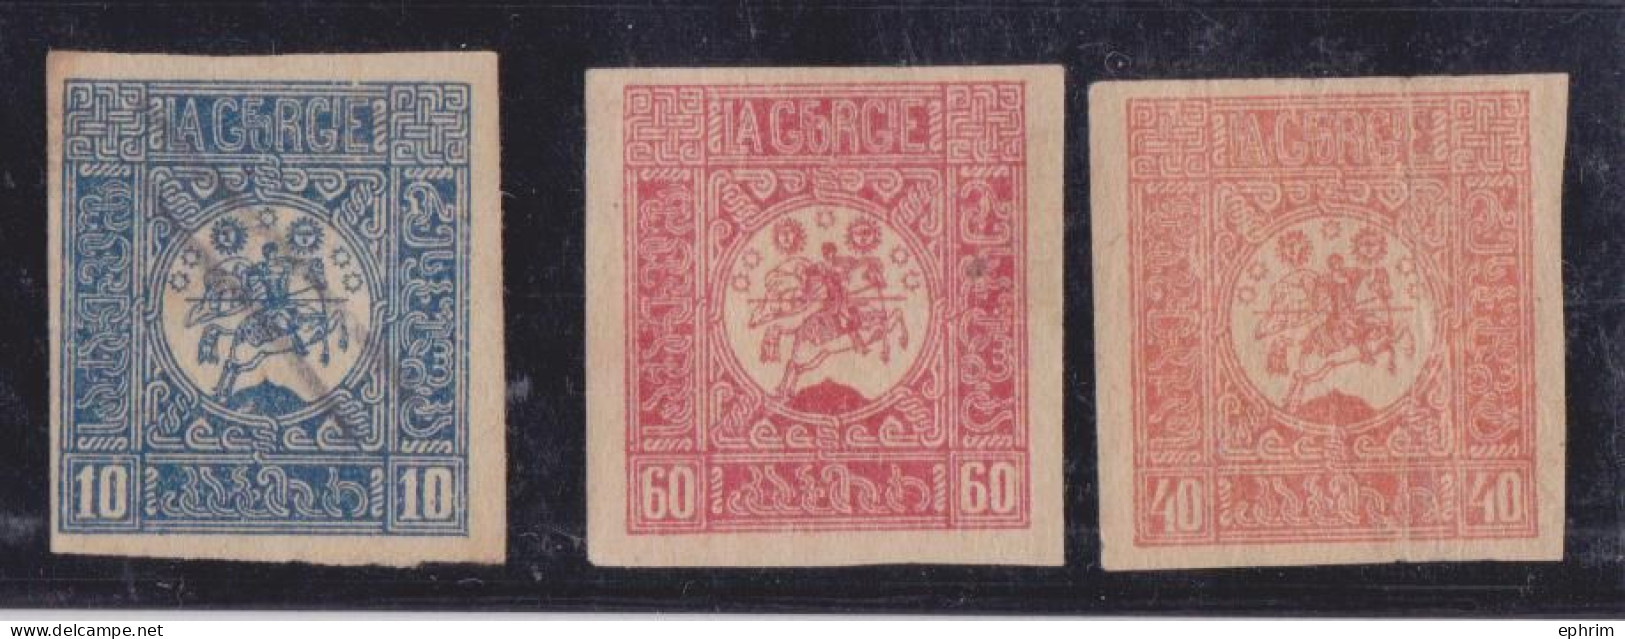 La Georgie Russie Timbre Ancien Georgia Russia Old Stamp Lot De 3 Timbres Alte Briefmarke Georgien 1919 (?) - Géorgie